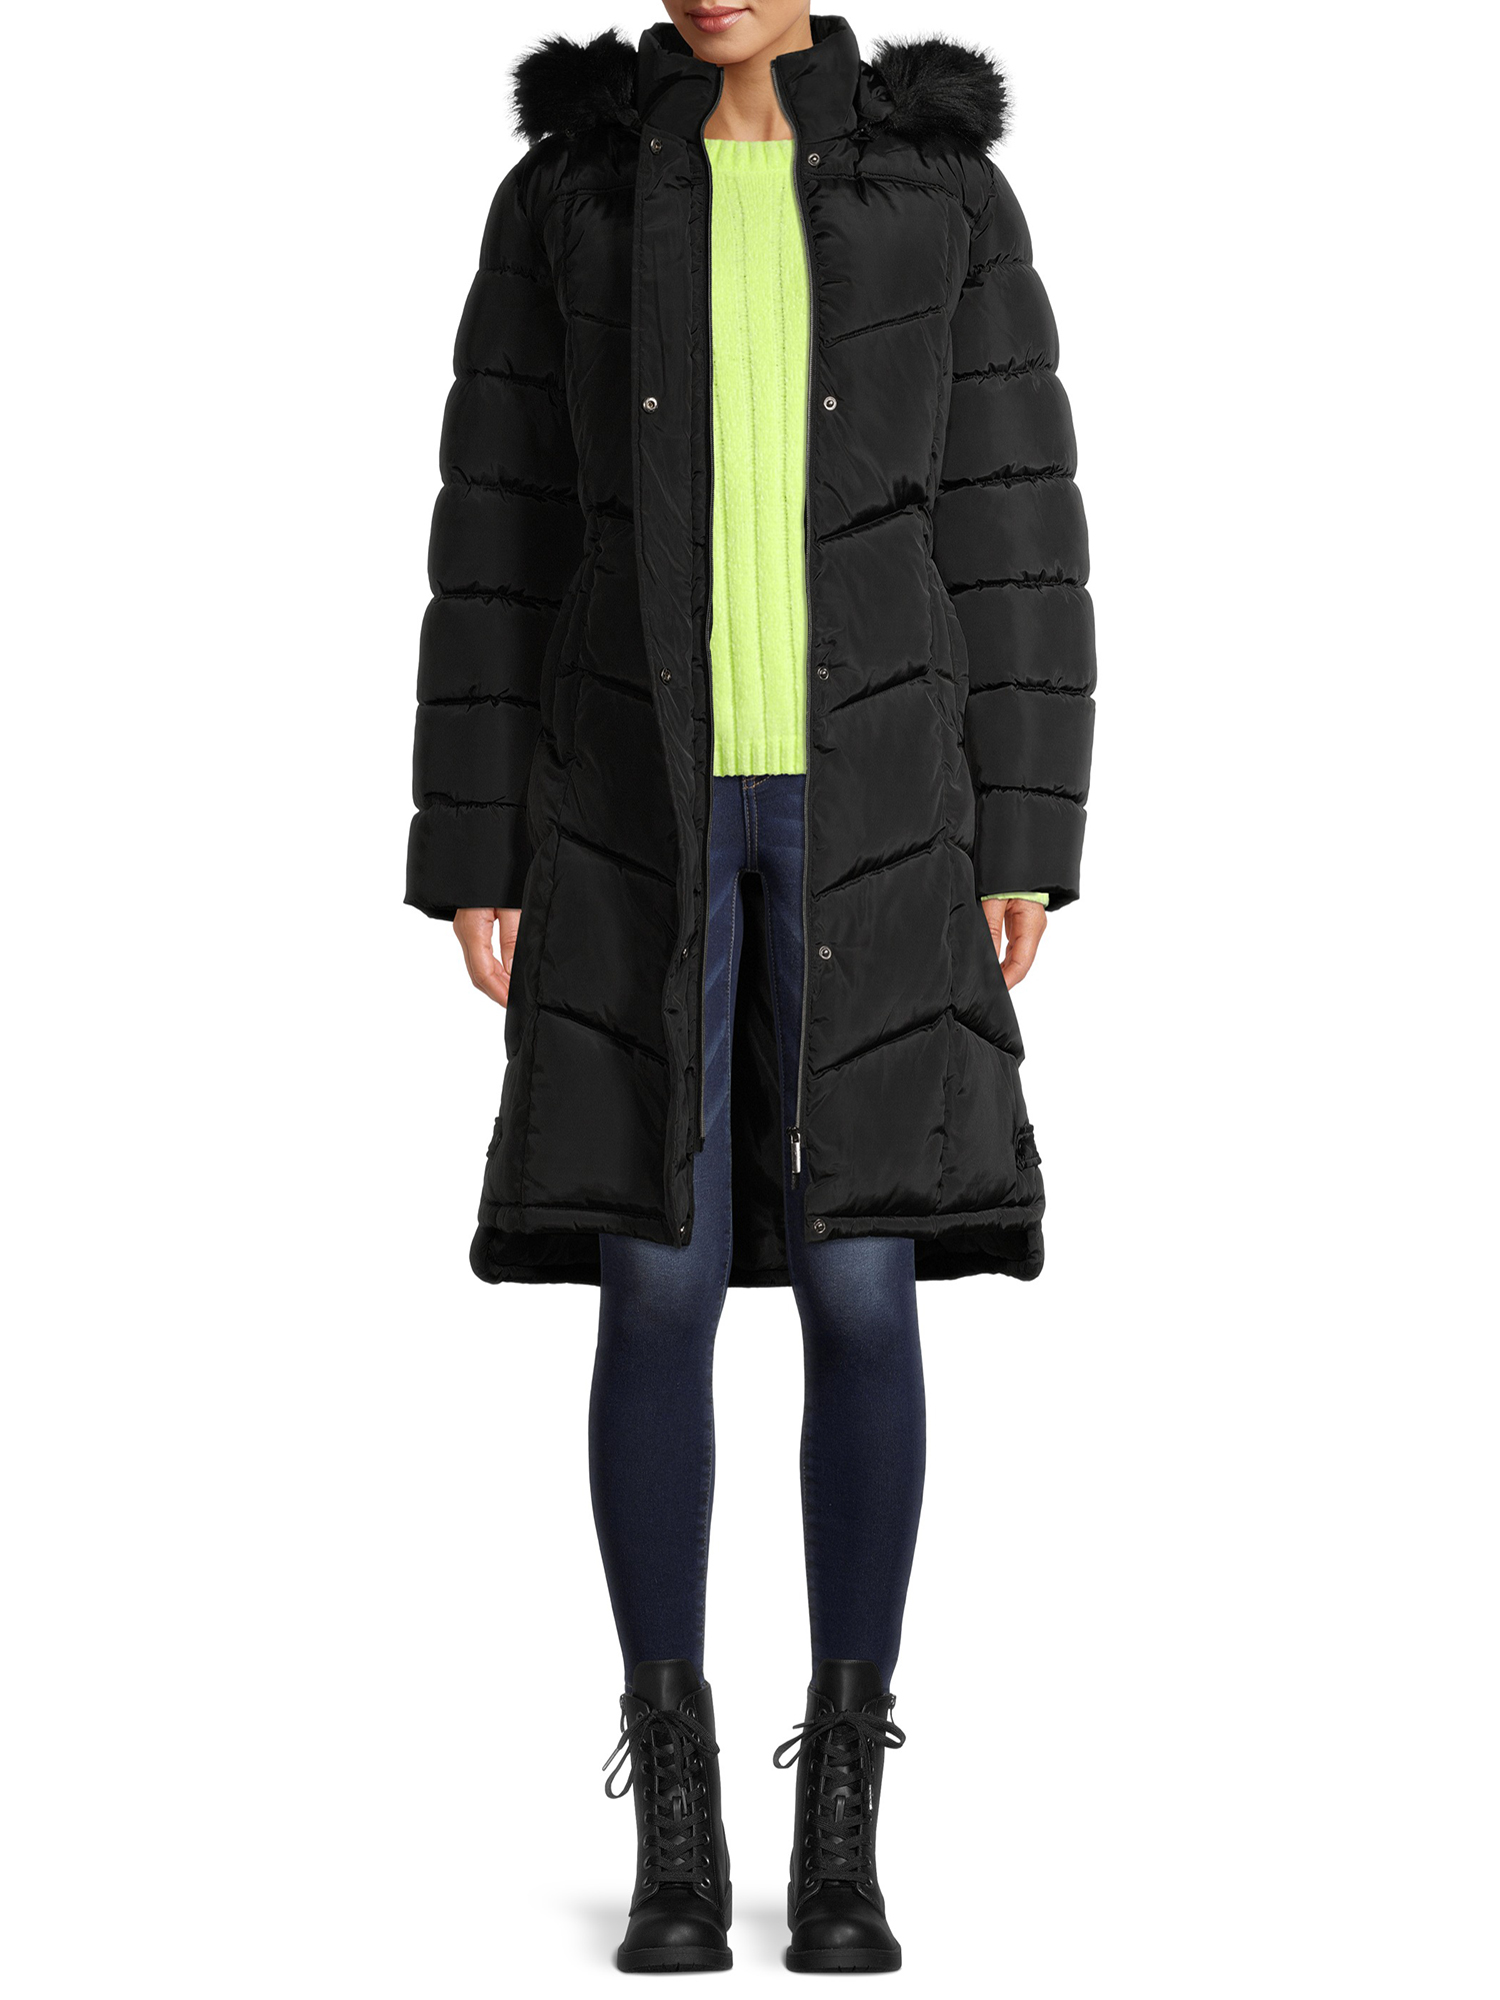 Big Chill Women's Maxi Chevron Puffer Coat with Faux Fur Trim Hood - image 3 of 6